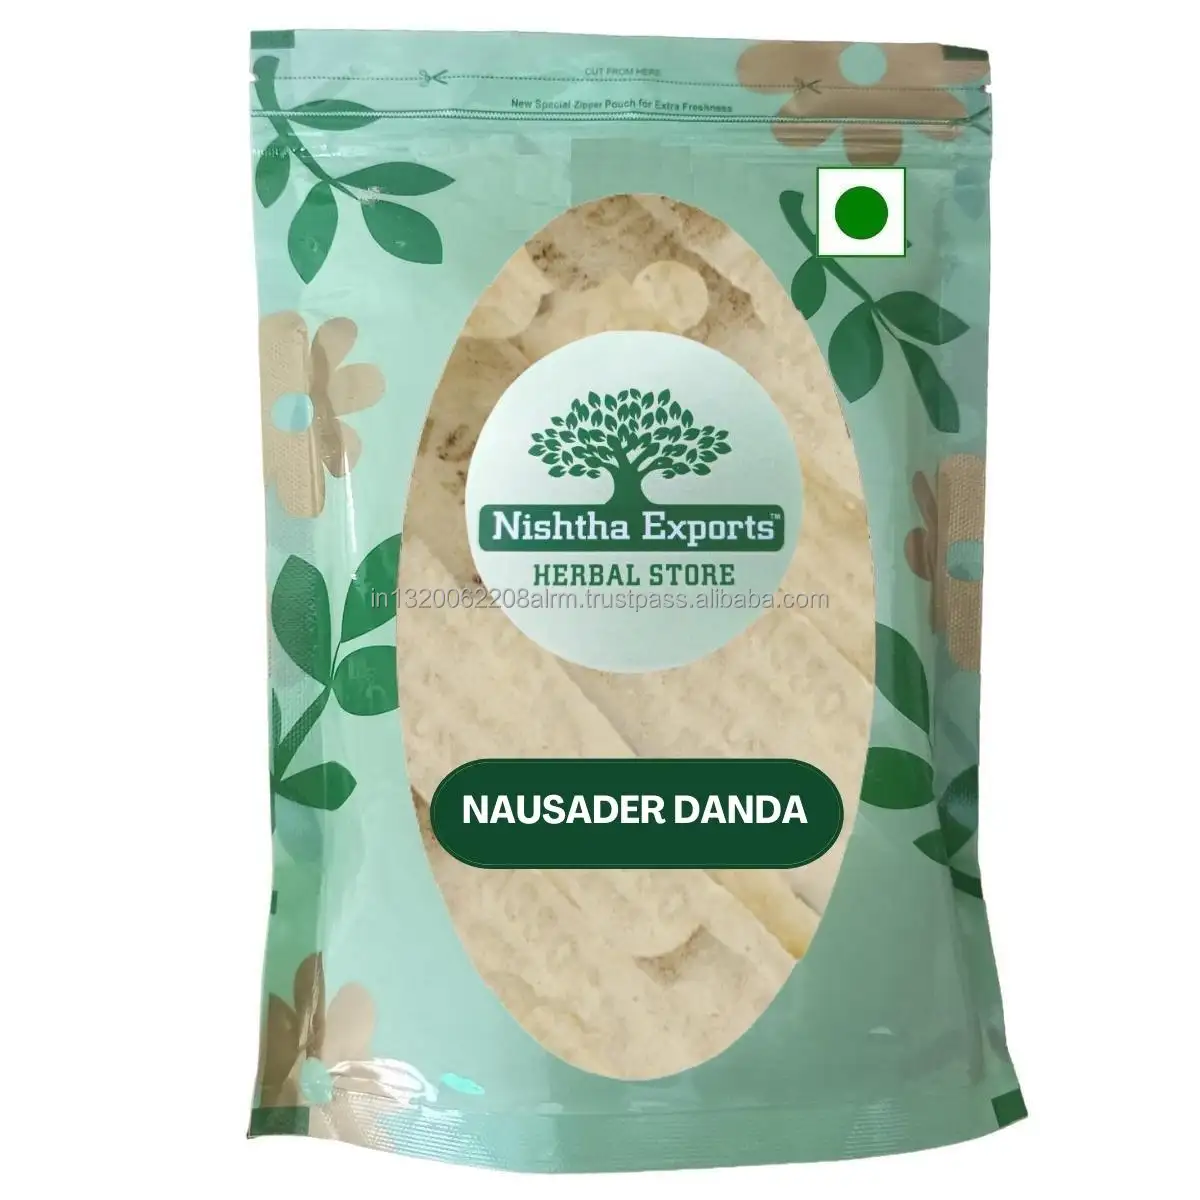 Nausader Danda Ammonium Choridium Naushadar Danda Dried Raw Herbs It is Used in Medicine in Cough Medicine as An Expectorant